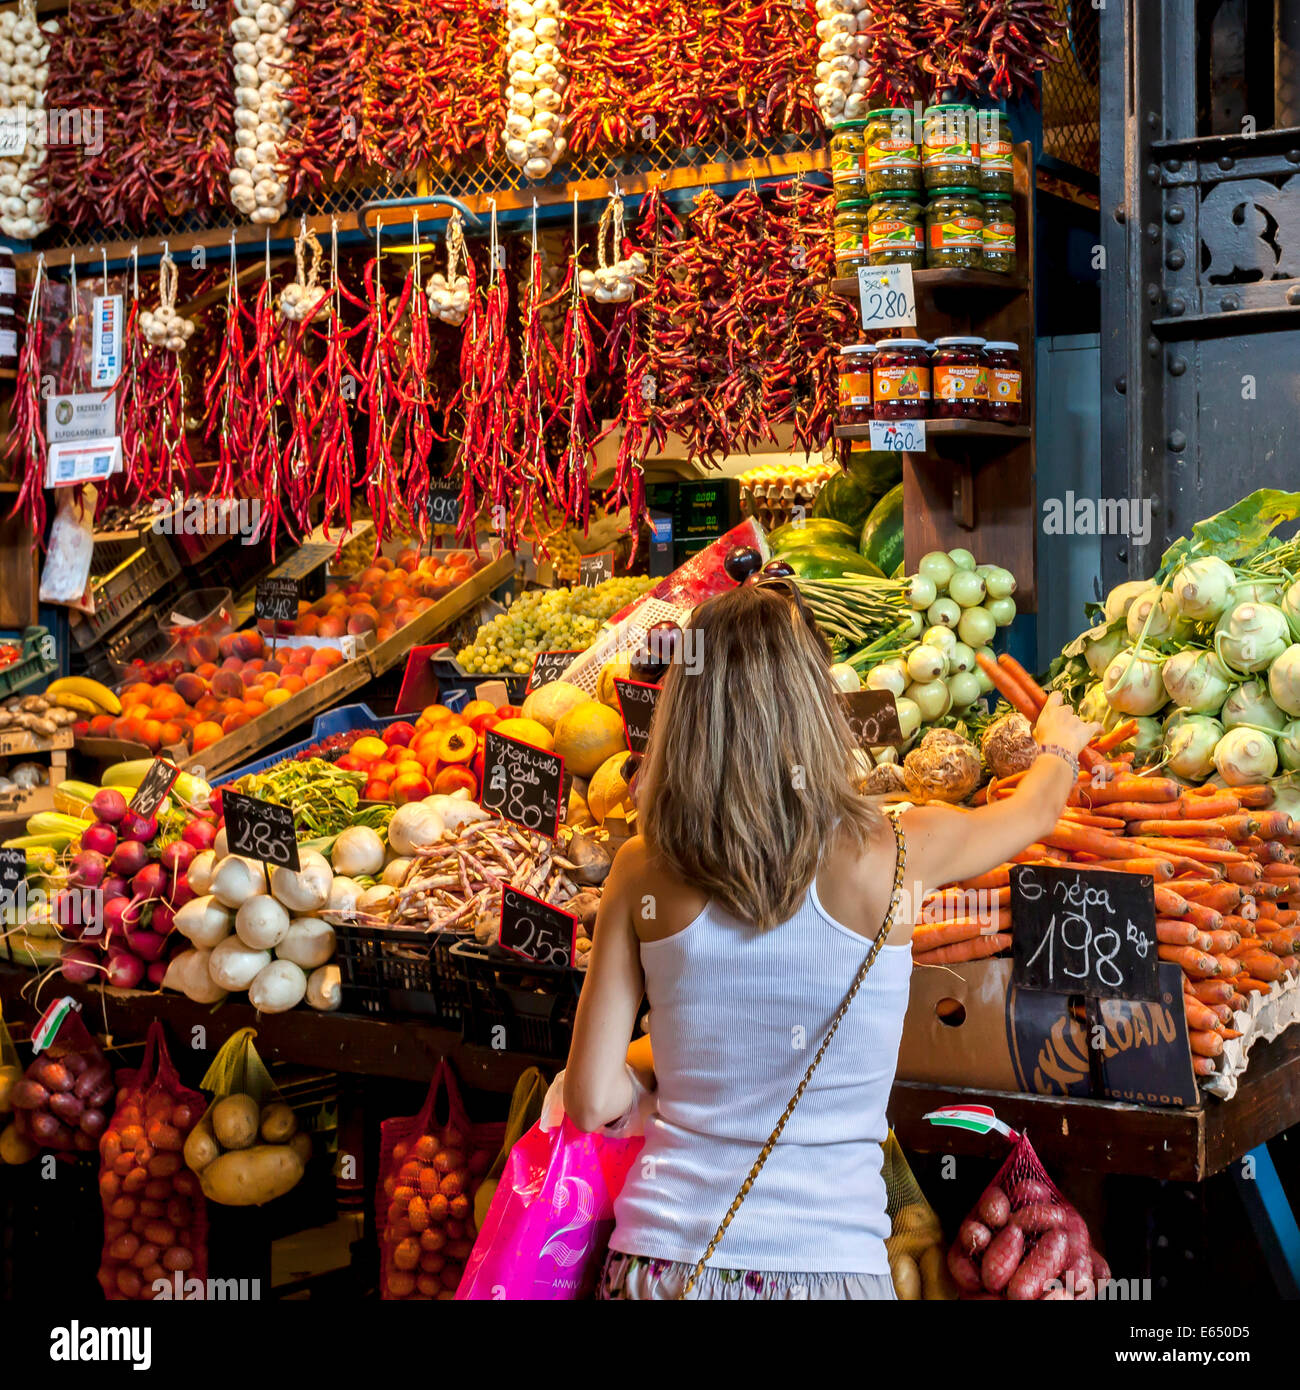 Fruit and vegetable stall, Great Market Hall or Central Market Hall, Központi Vasarcsarnok, Budapest, Hungary Stock Photo